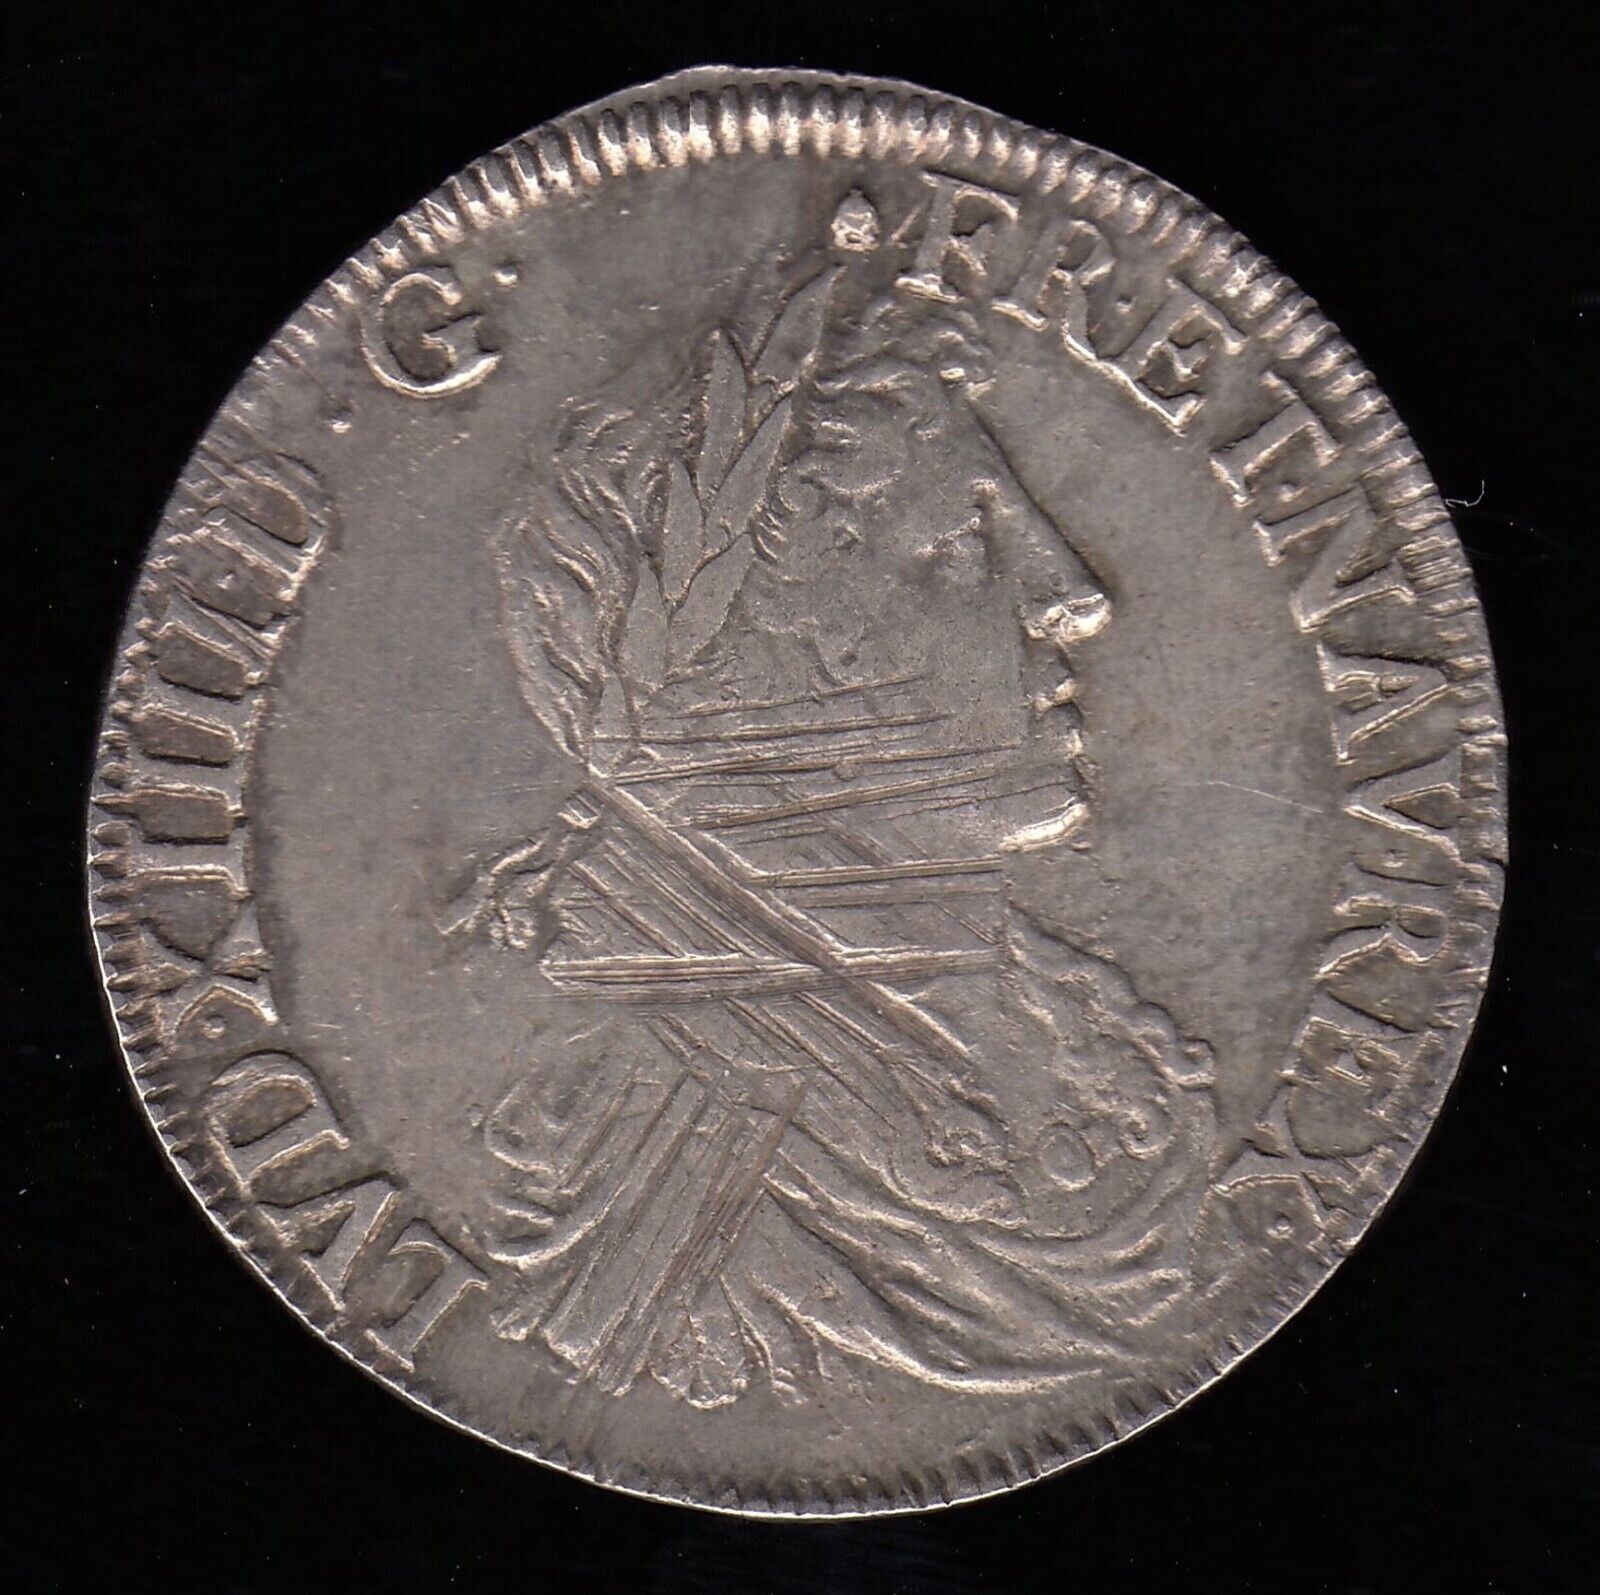 France 1/2 ECU, 1662 L - Bayonne Mint, EF. Traces of Original Lustre